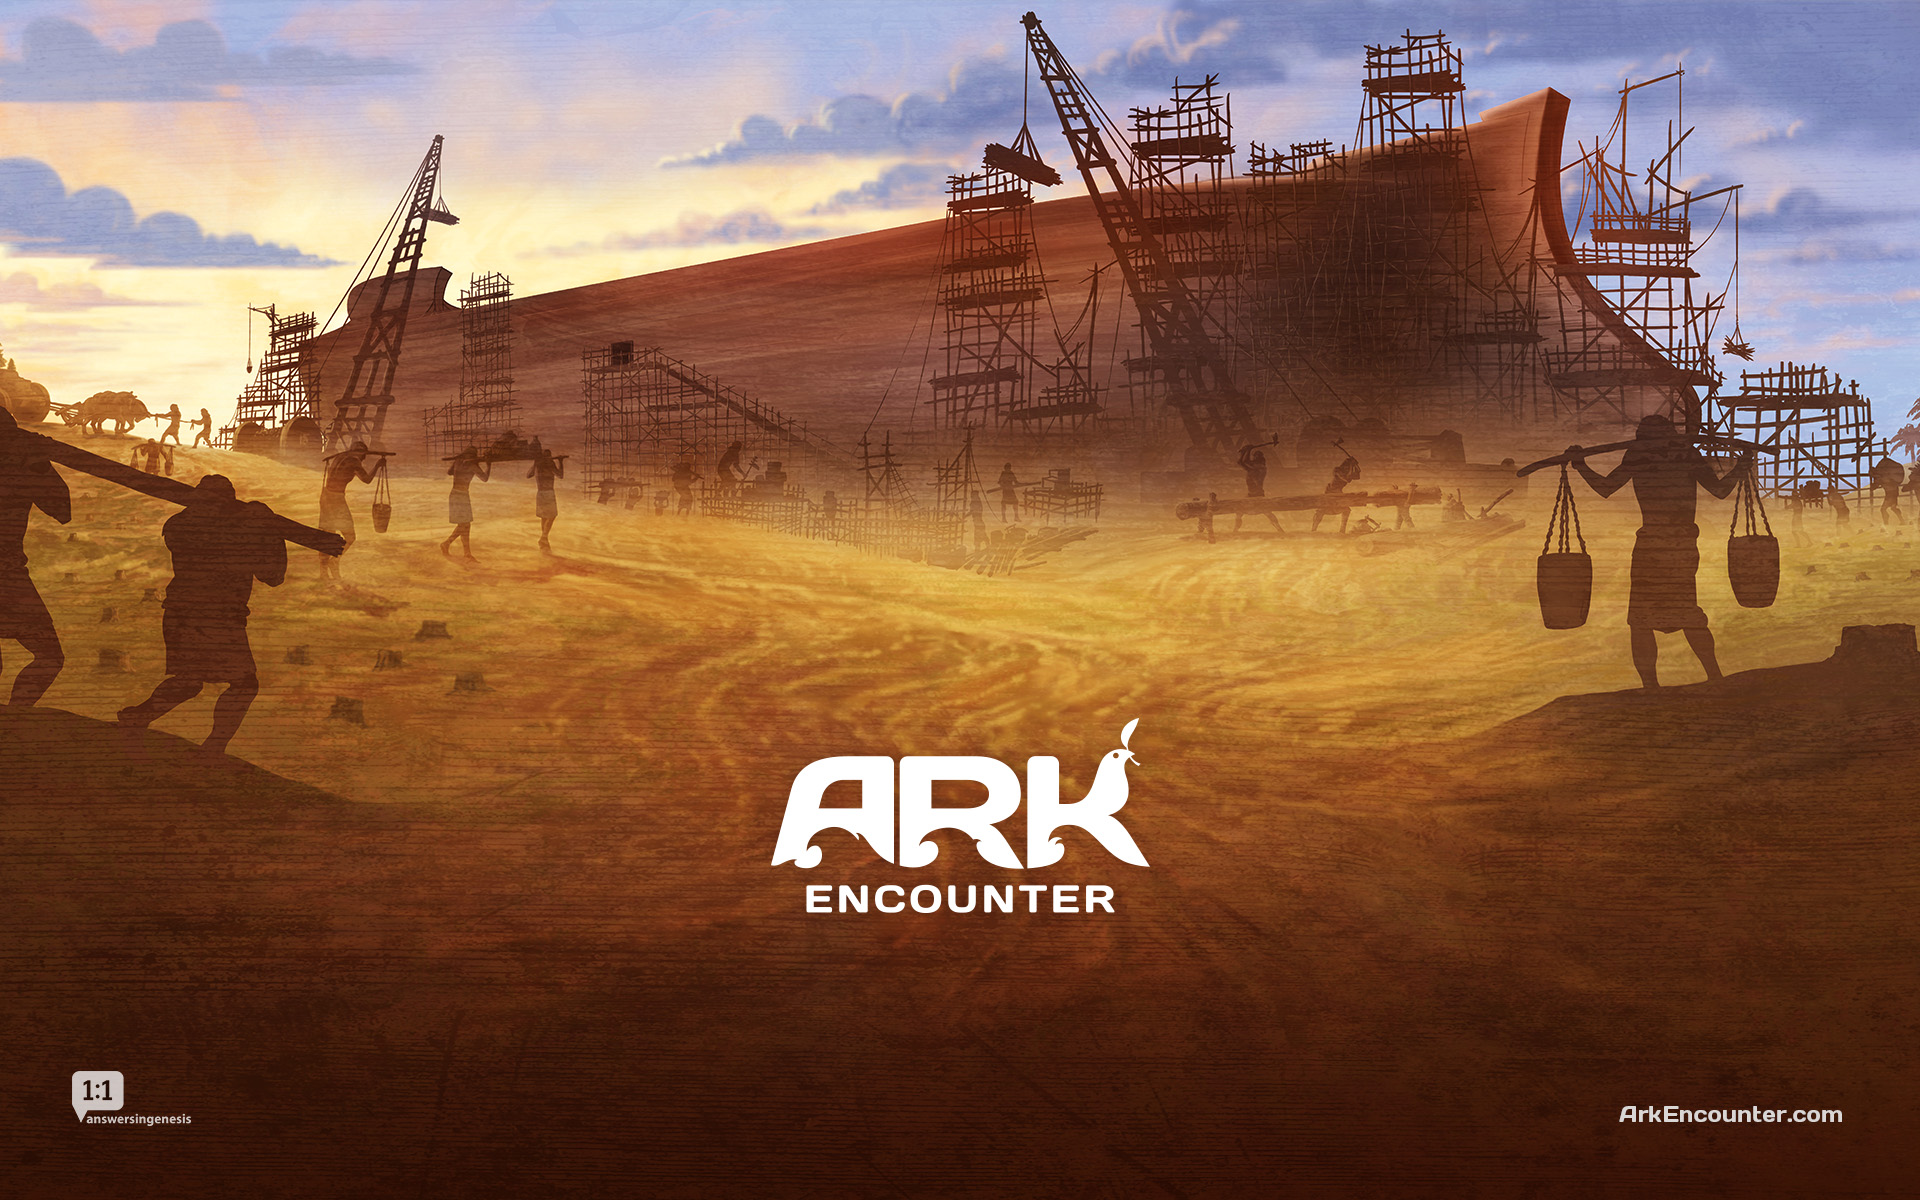 Creationist's Noah's Ark Theme Park Gets $18 Million Tax Break, Won't Hire Gays, Atheists